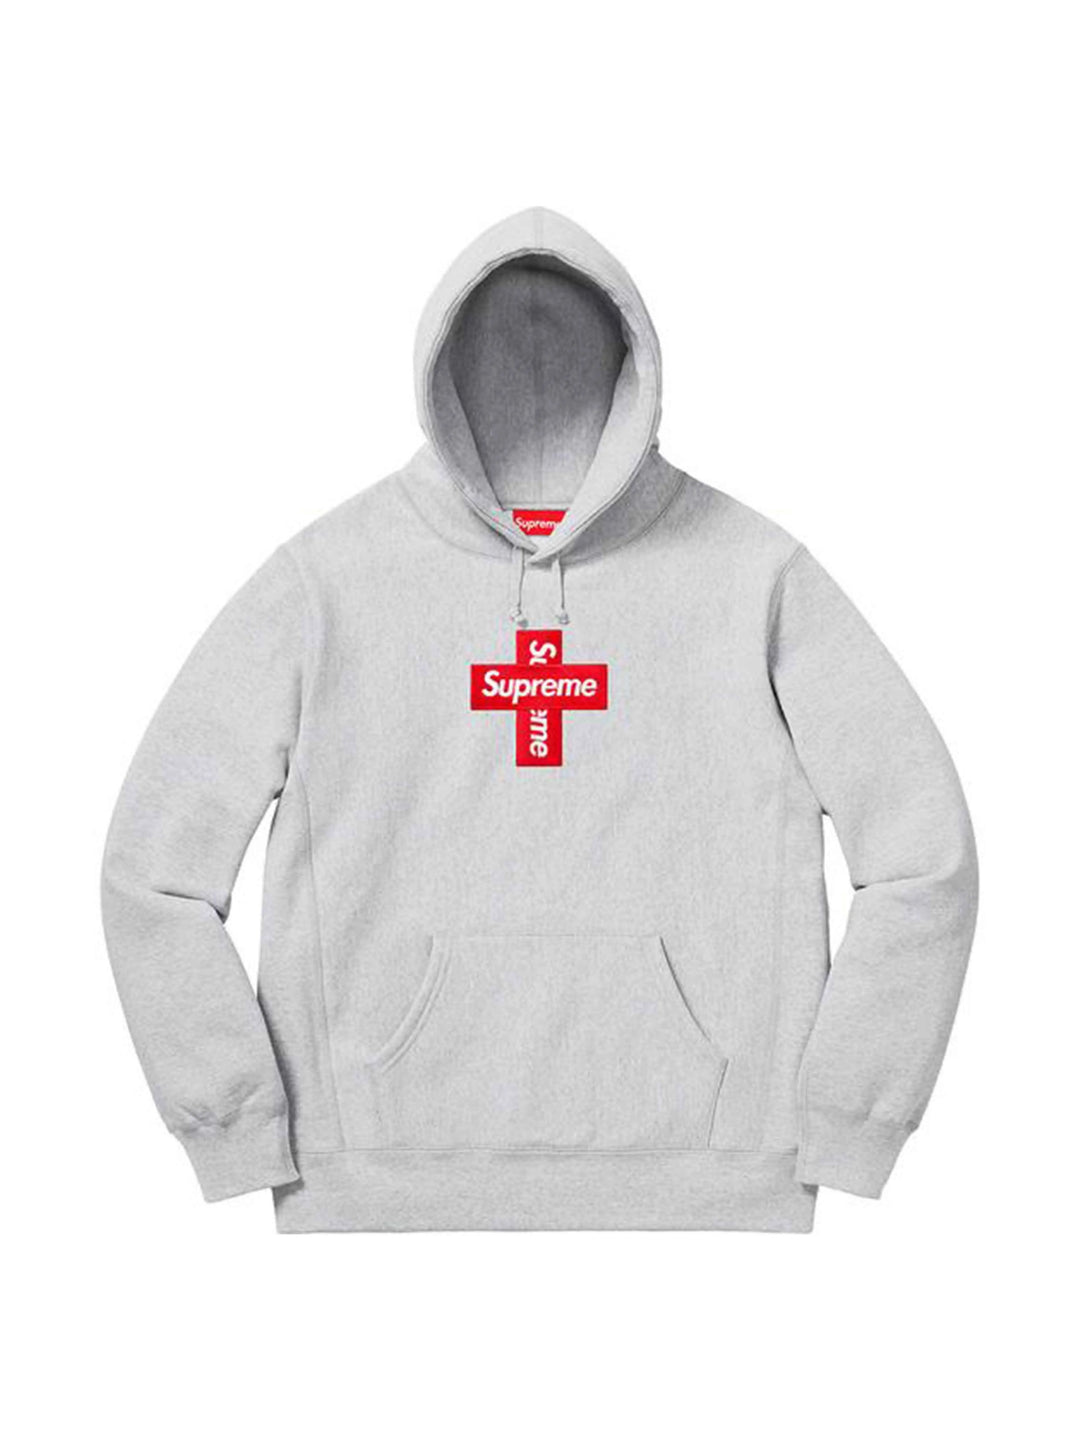 Supreme Cross Box Logo Hooded Sweatshirt Heather Grey [FW20] Prior